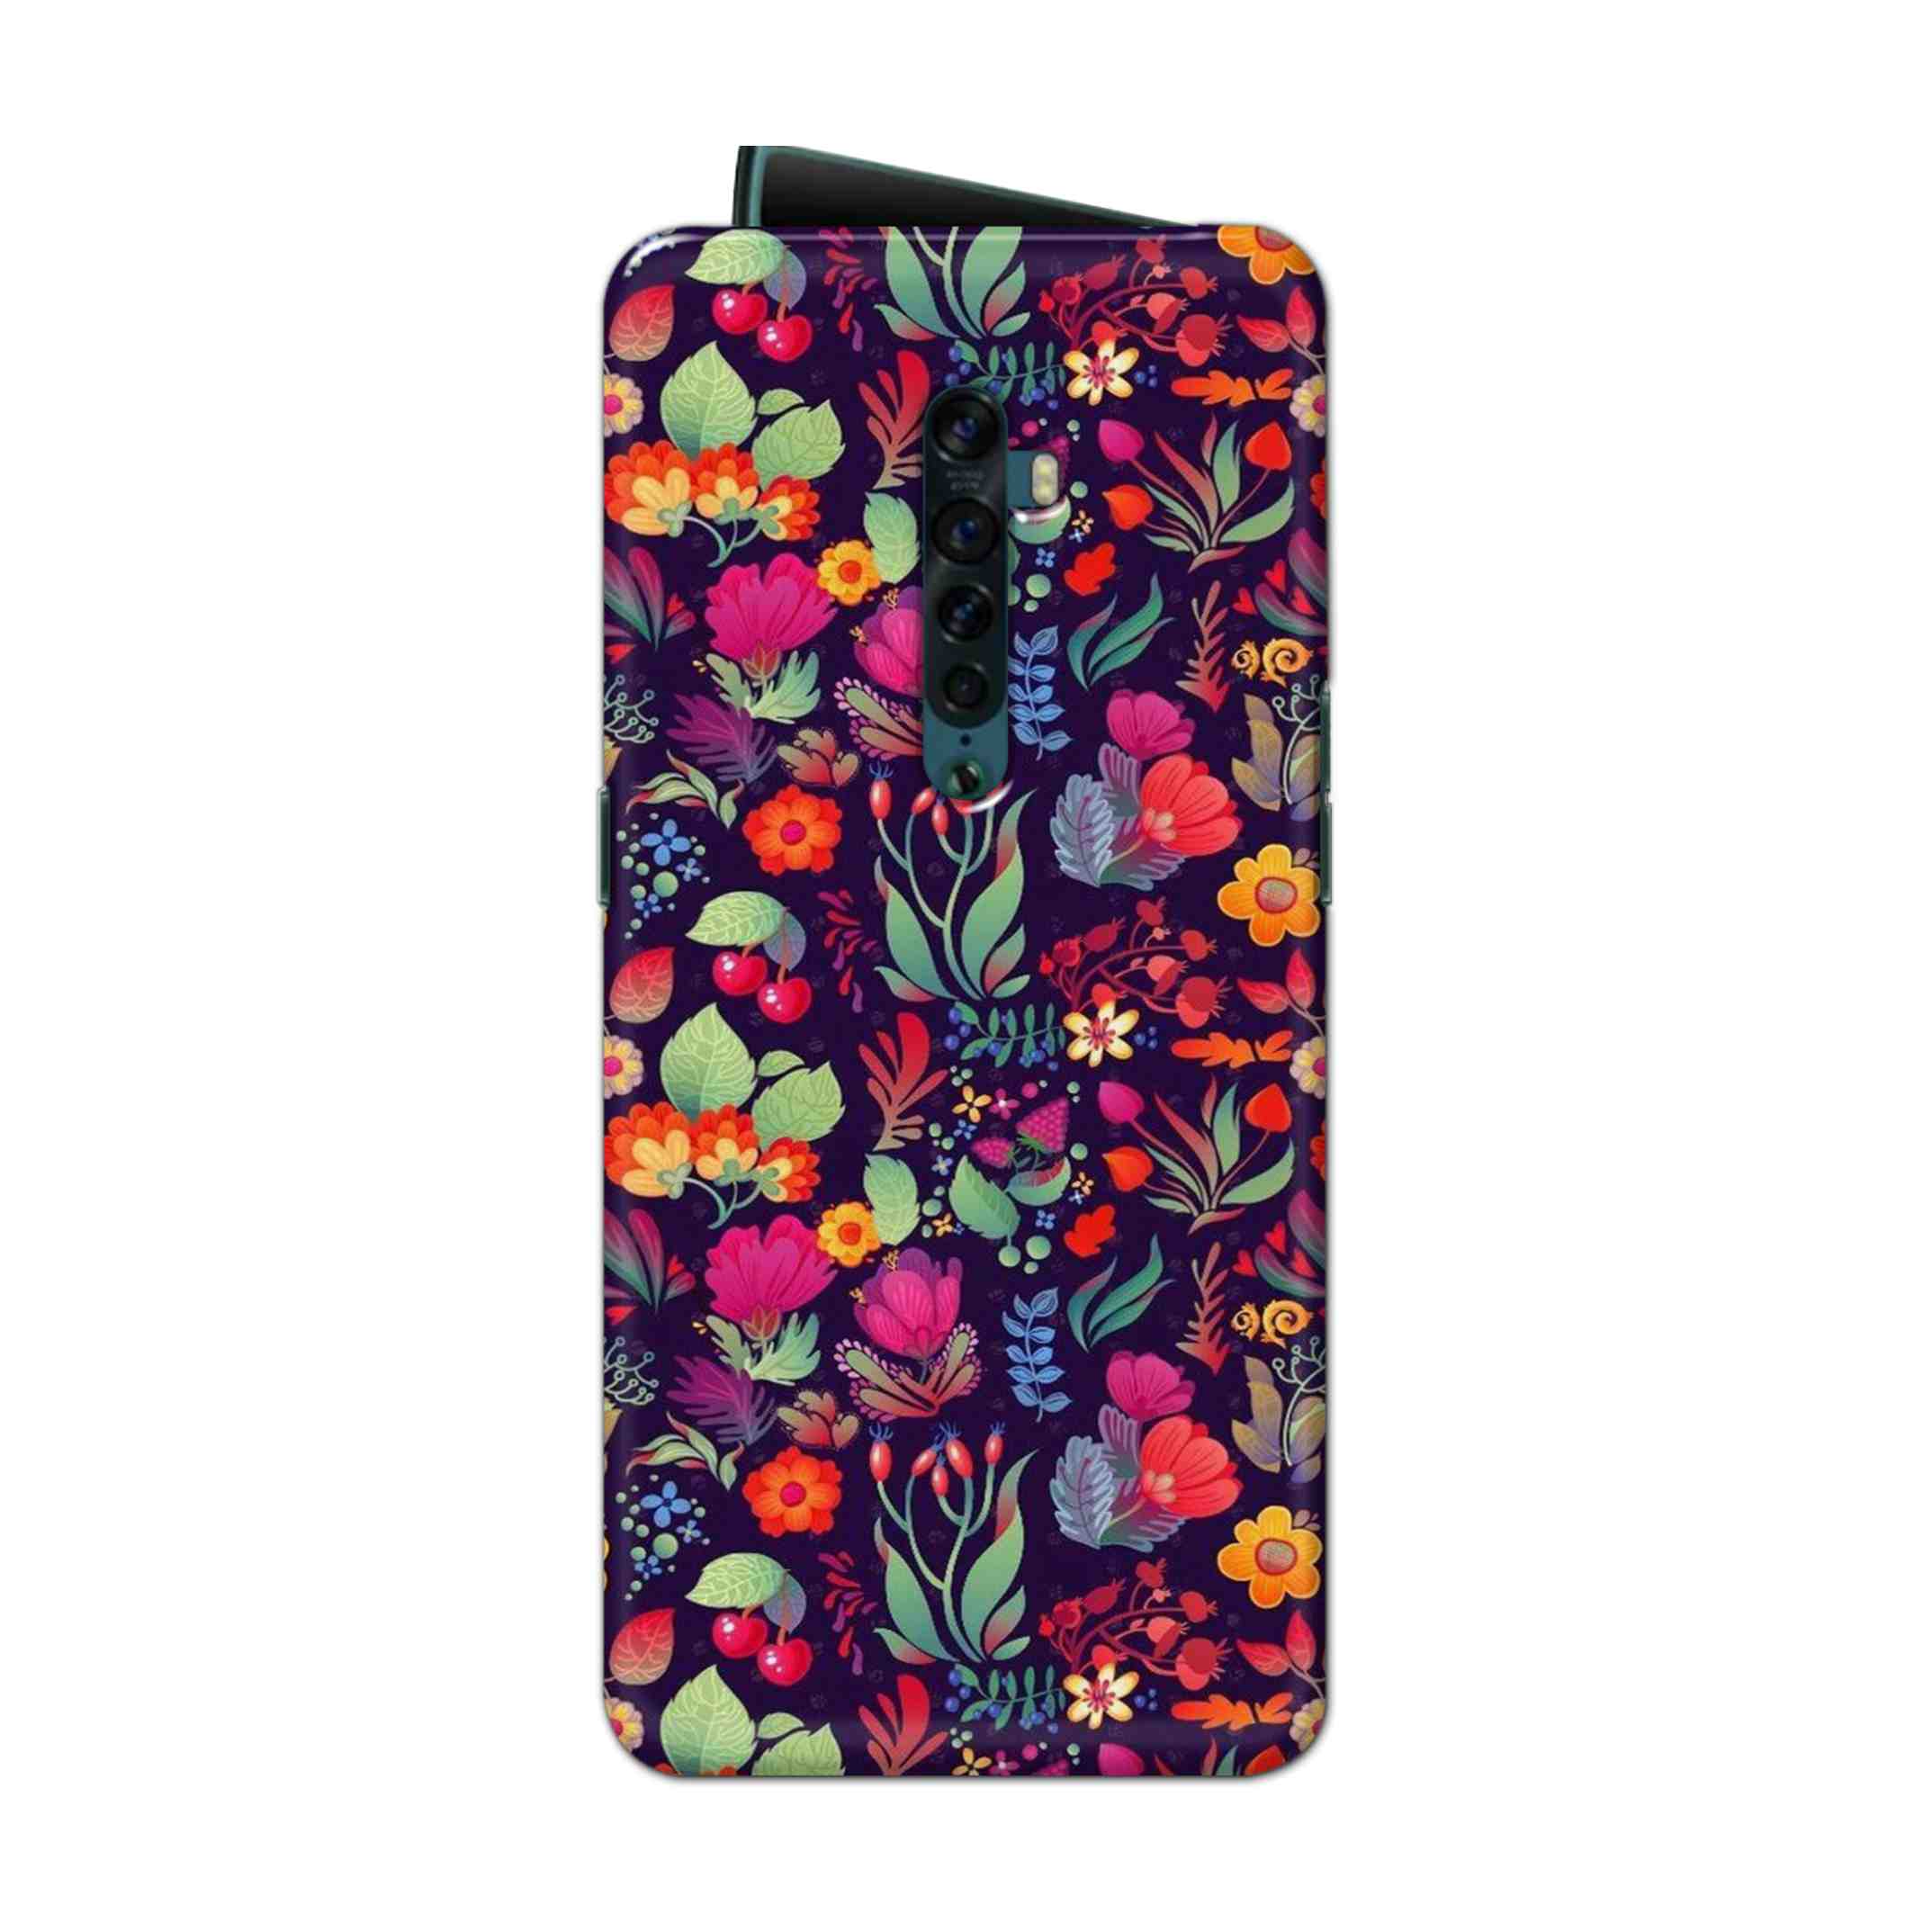 Buy Fruits Flower Hard Back Mobile Phone Case Cover For Oppo Reno 2 Online